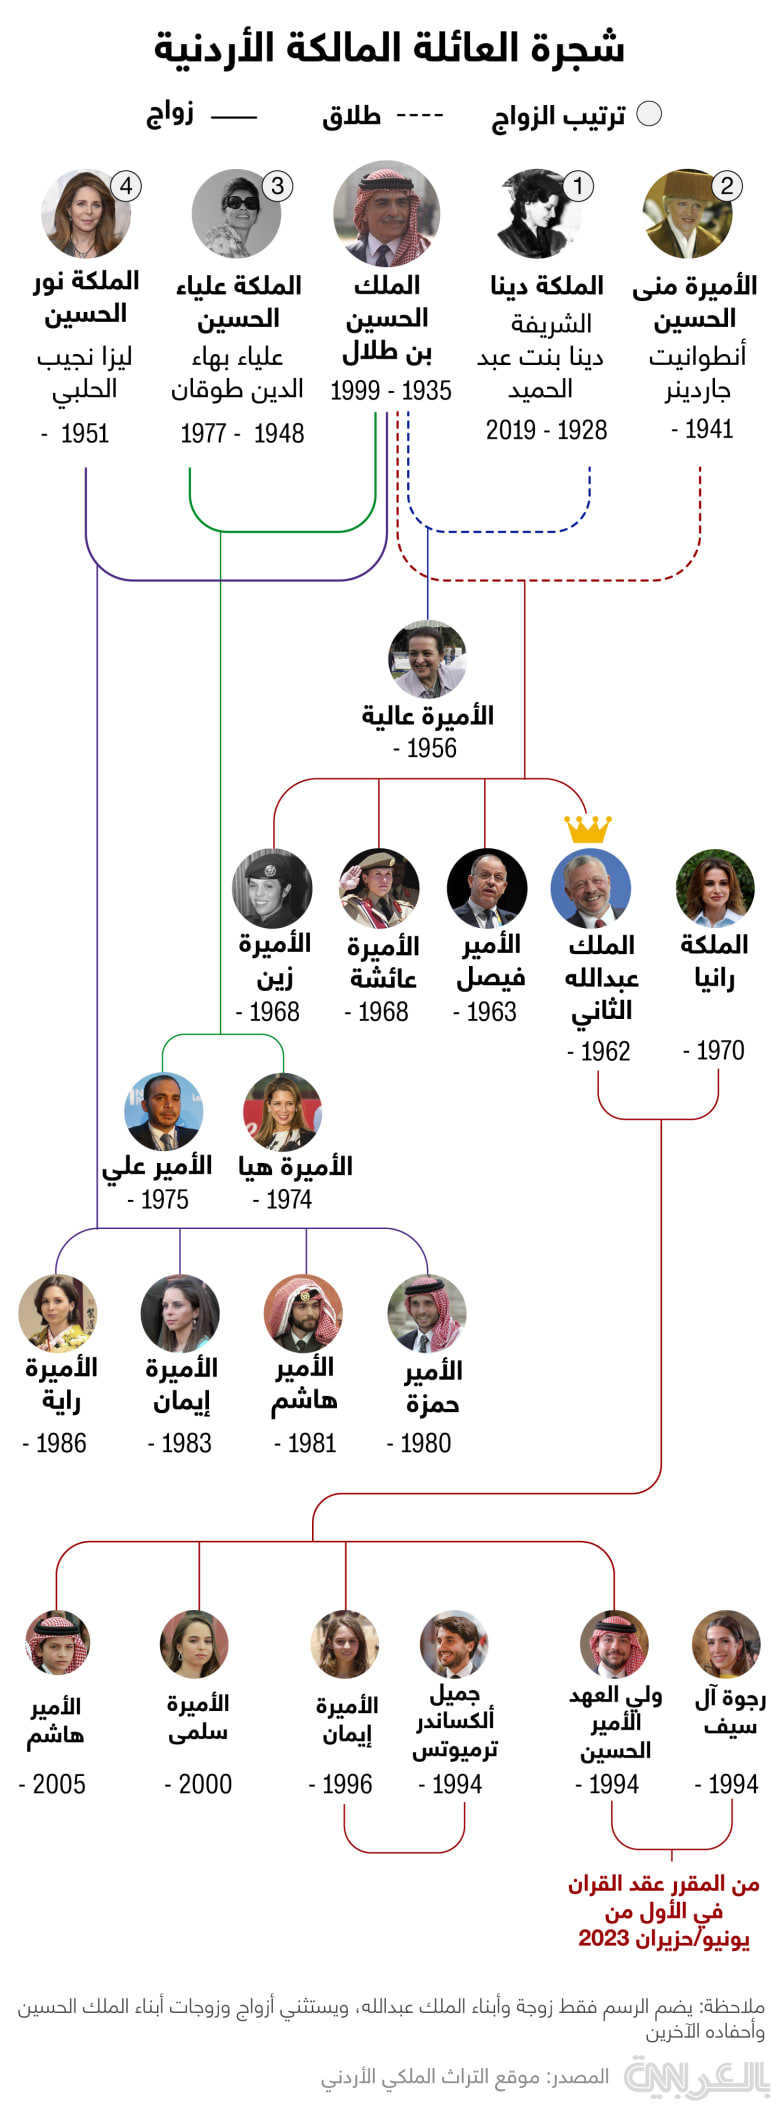 al-hussein-crown-prince-family-tree